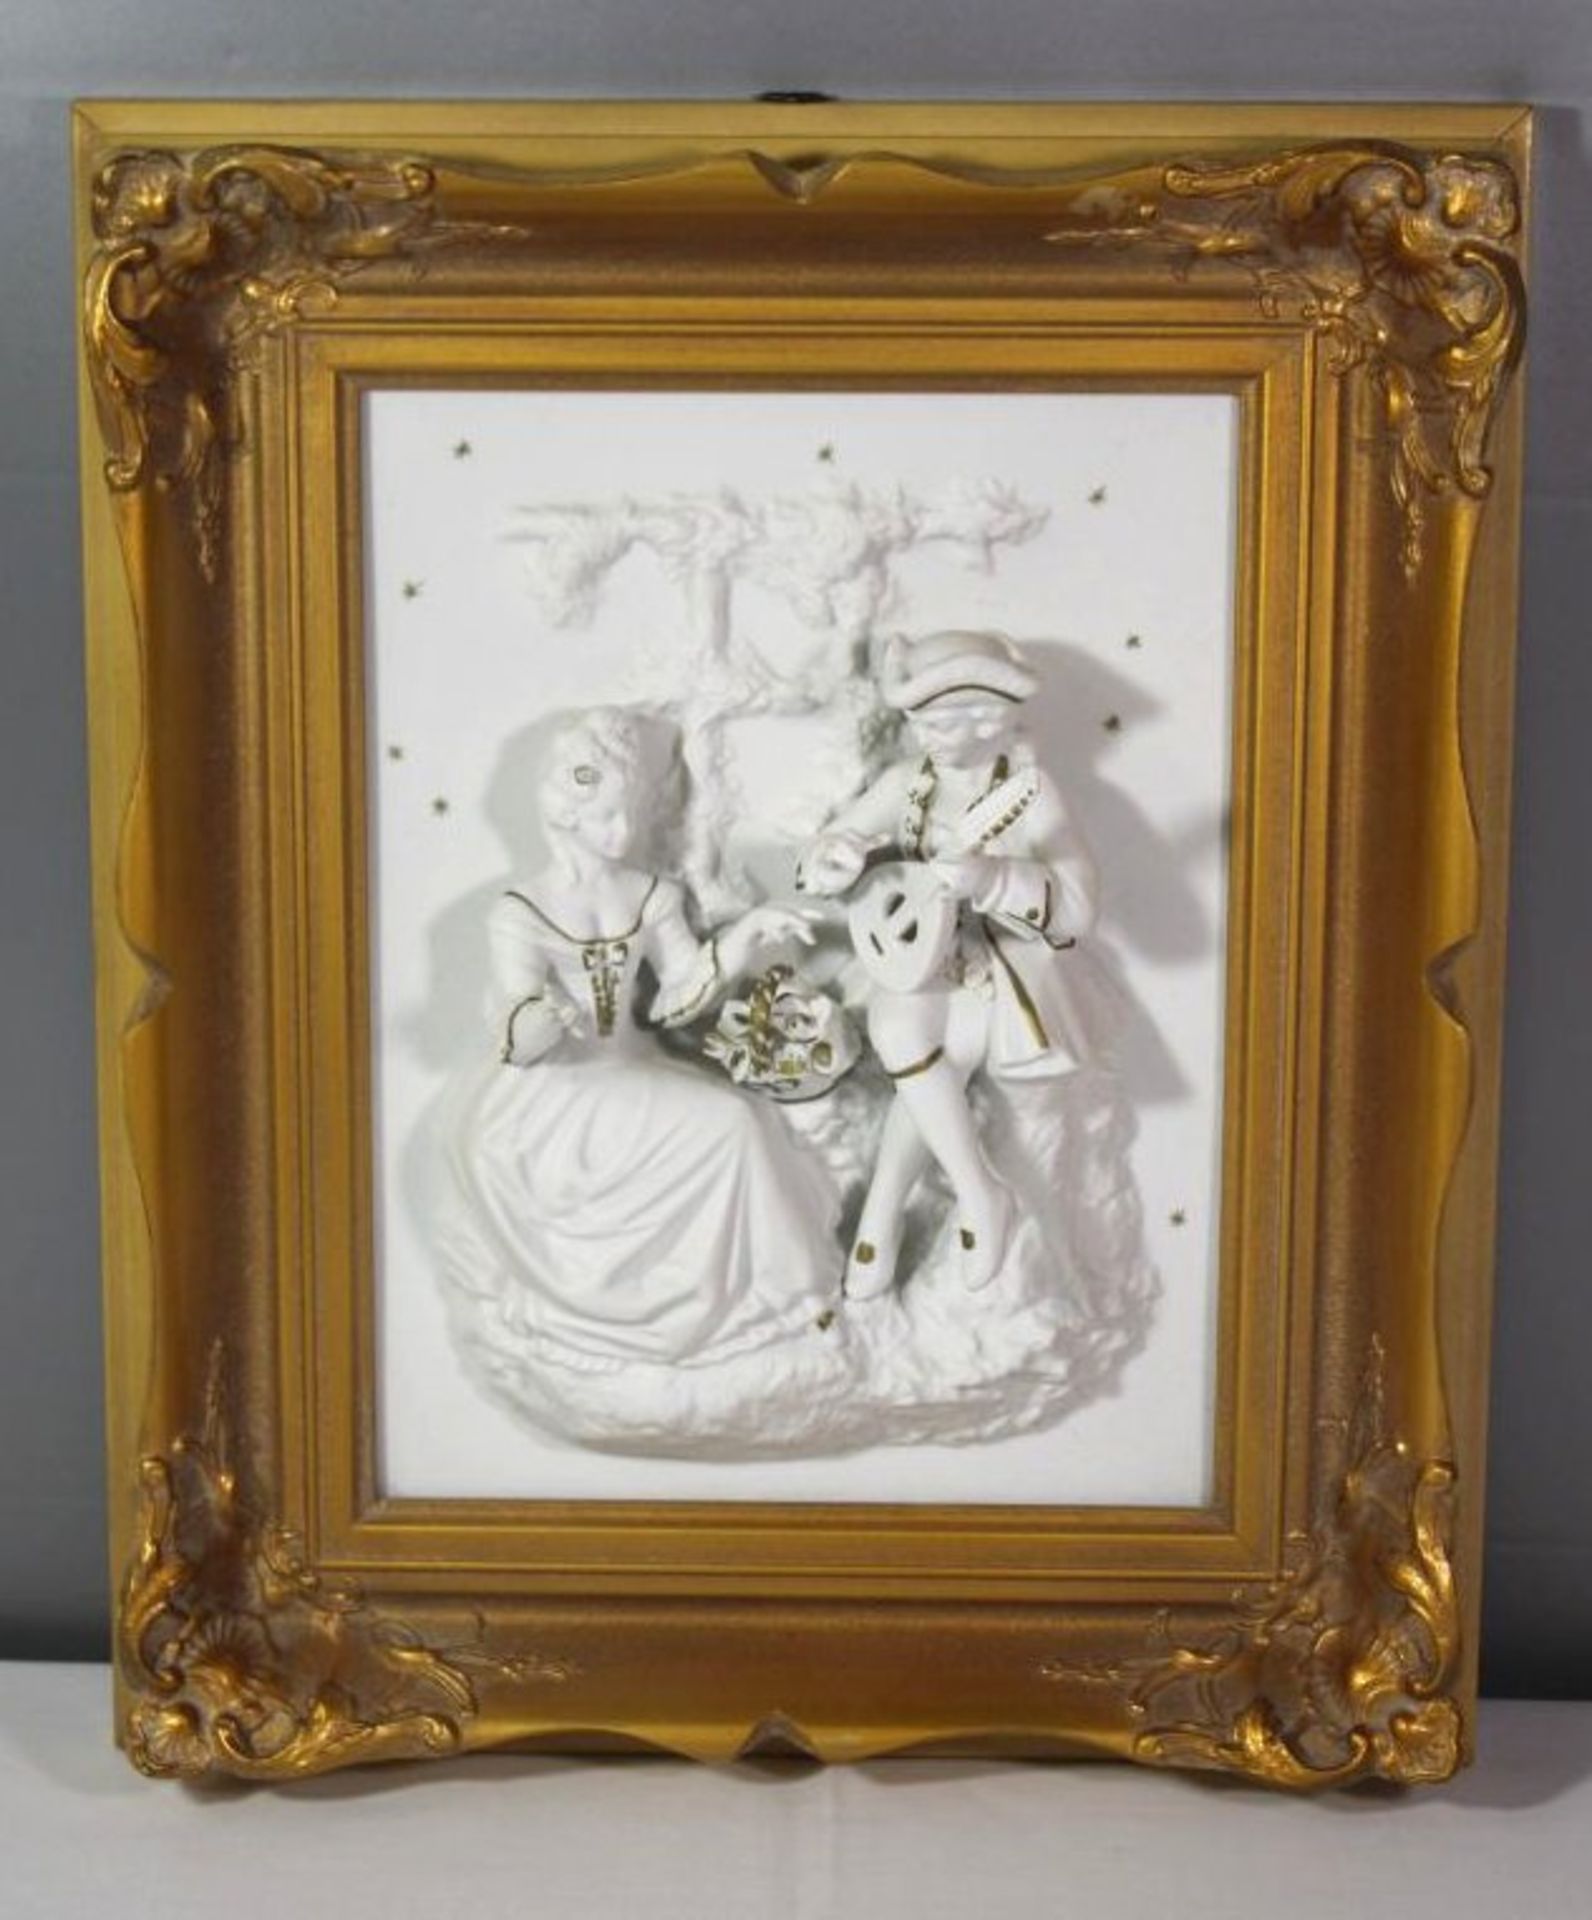 Porzellan-Reliefbild, Dresden Design, romantische Szene, gerahmt, RG 37 x 31cm.